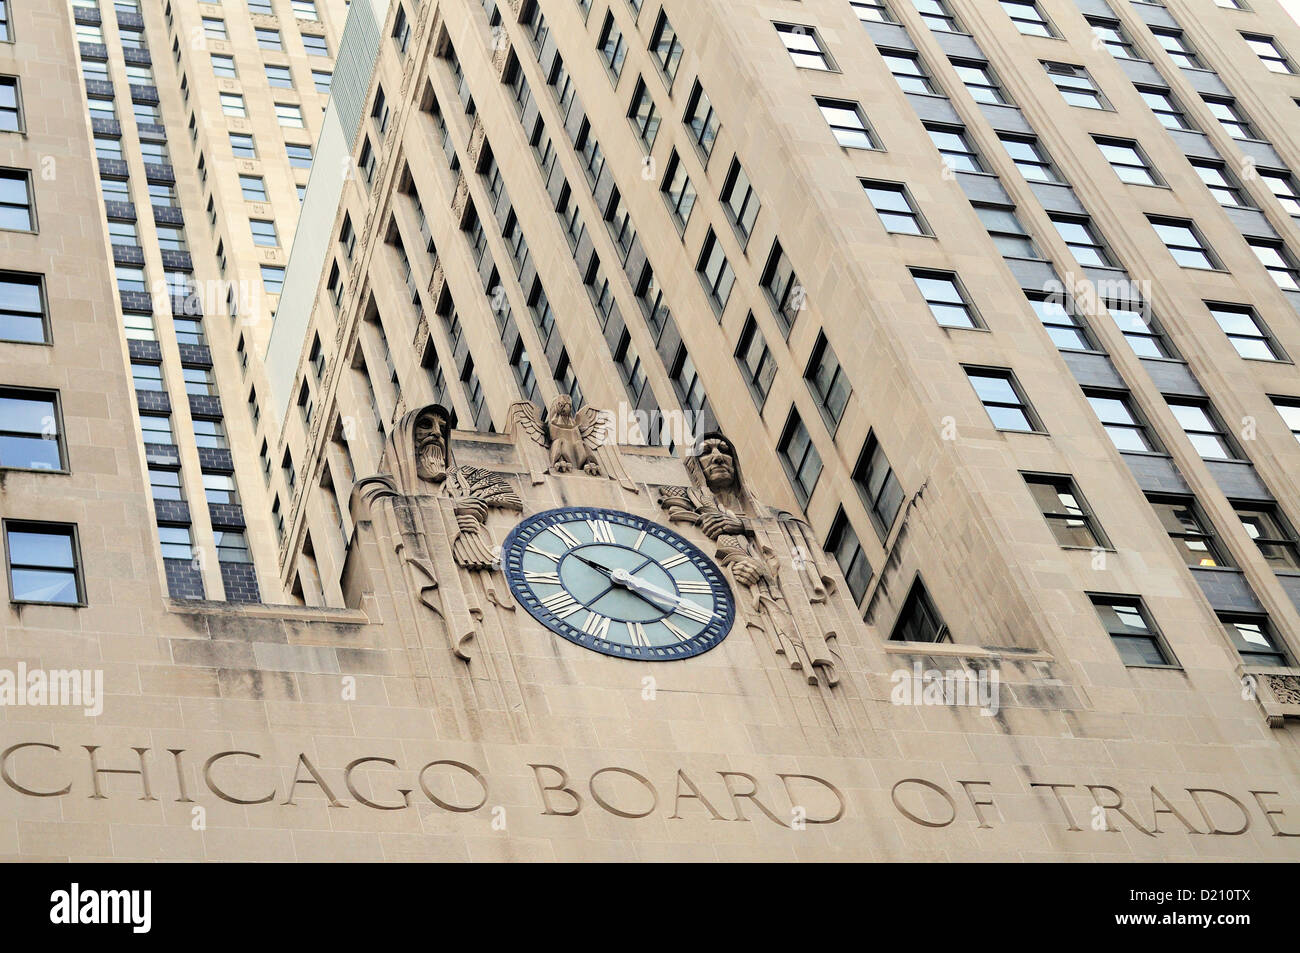 USA Illinois Chicago Board of Trade Building LaSalle Street National Historic Landmark. Stock Photo